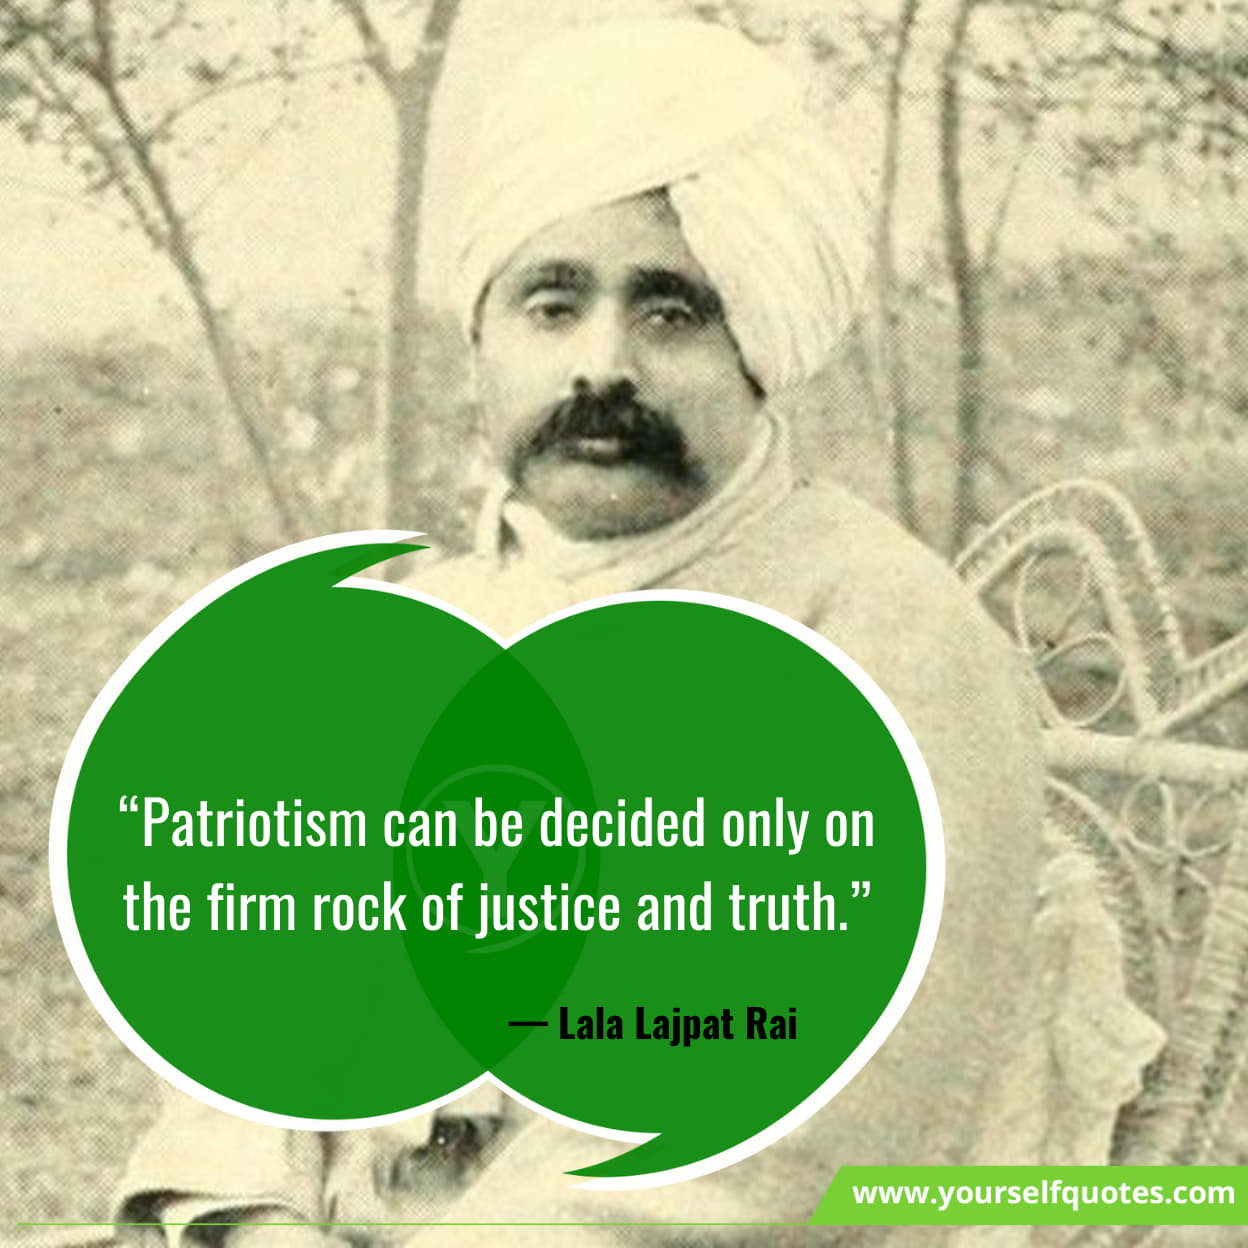 Lala Lajpat Rai Quotes About Nation